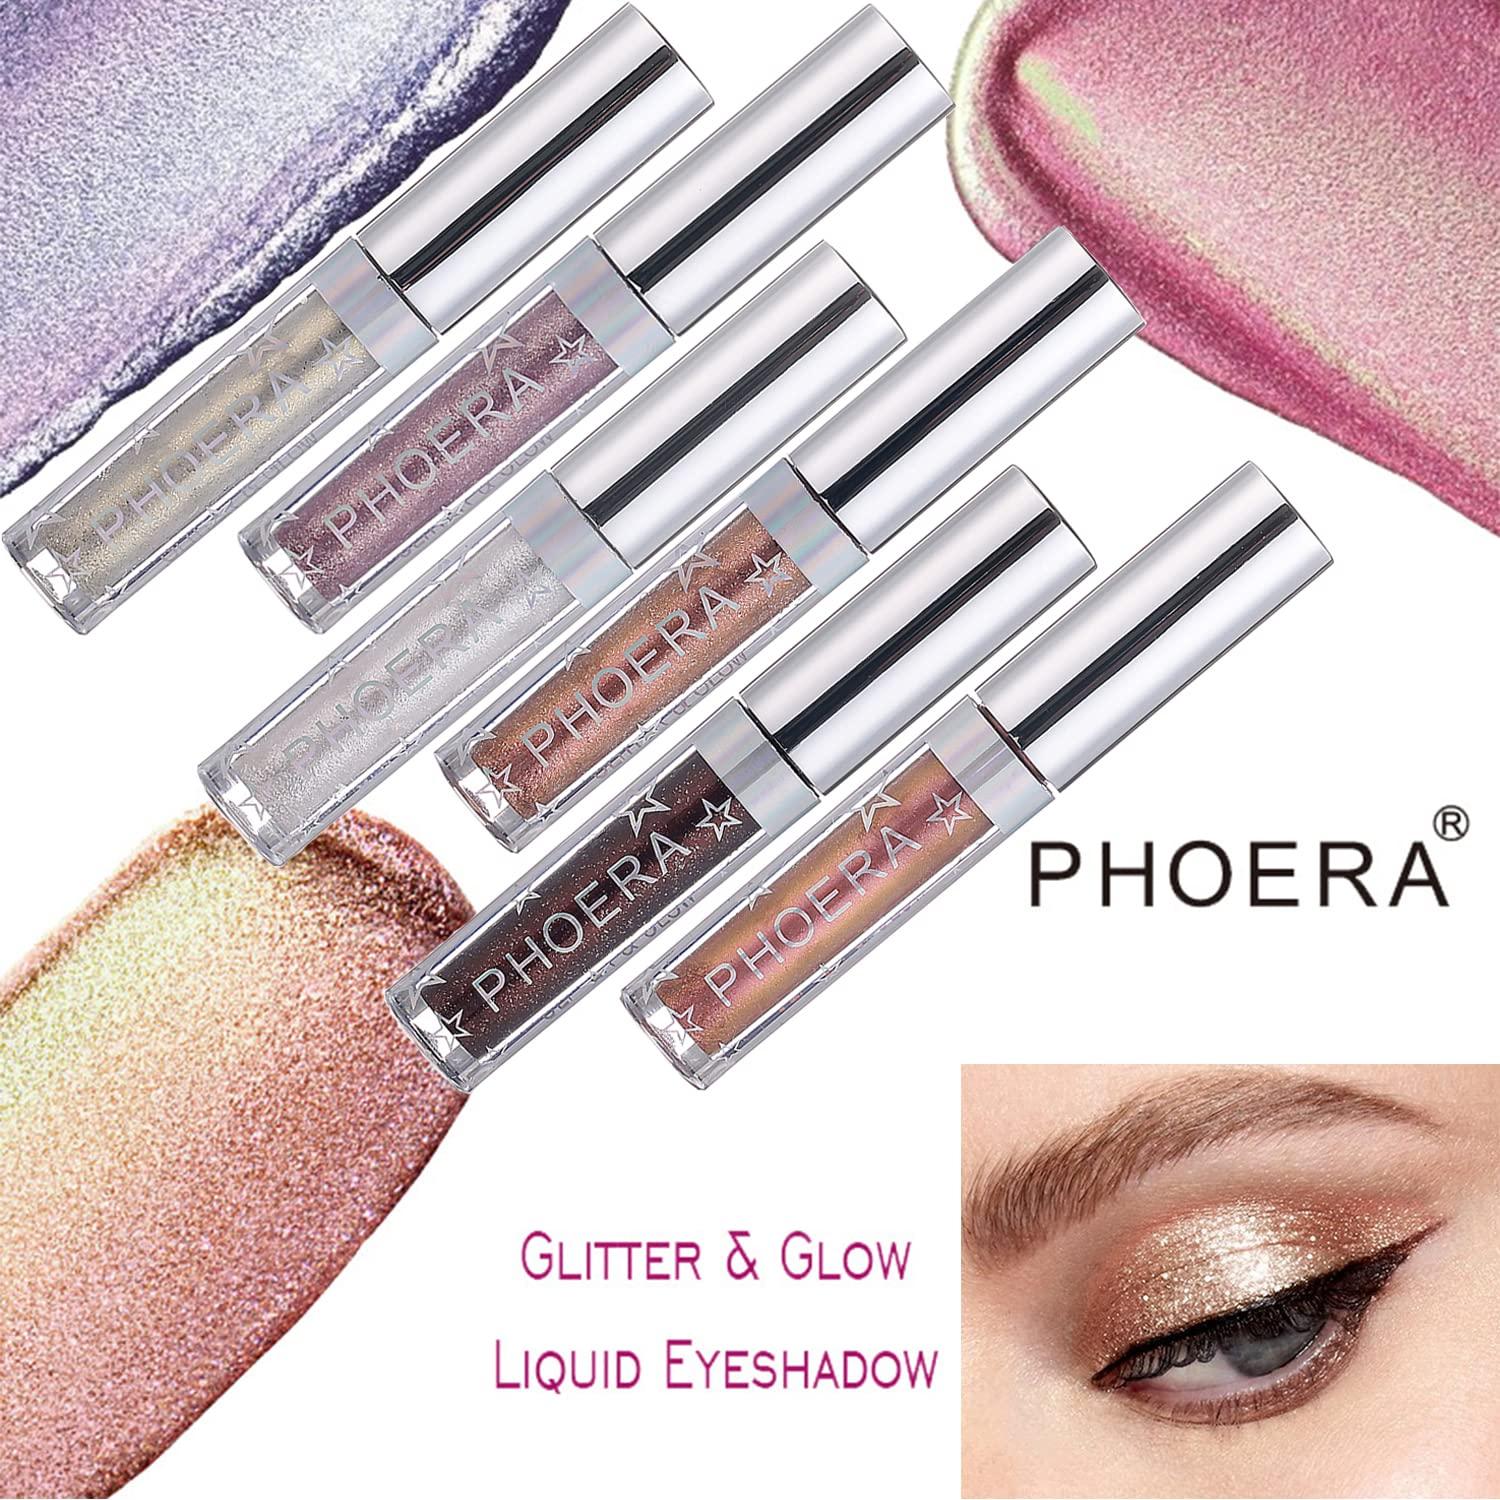 Phoera Glitter & Glow Liquid Eyeshadow – phoeraofficial